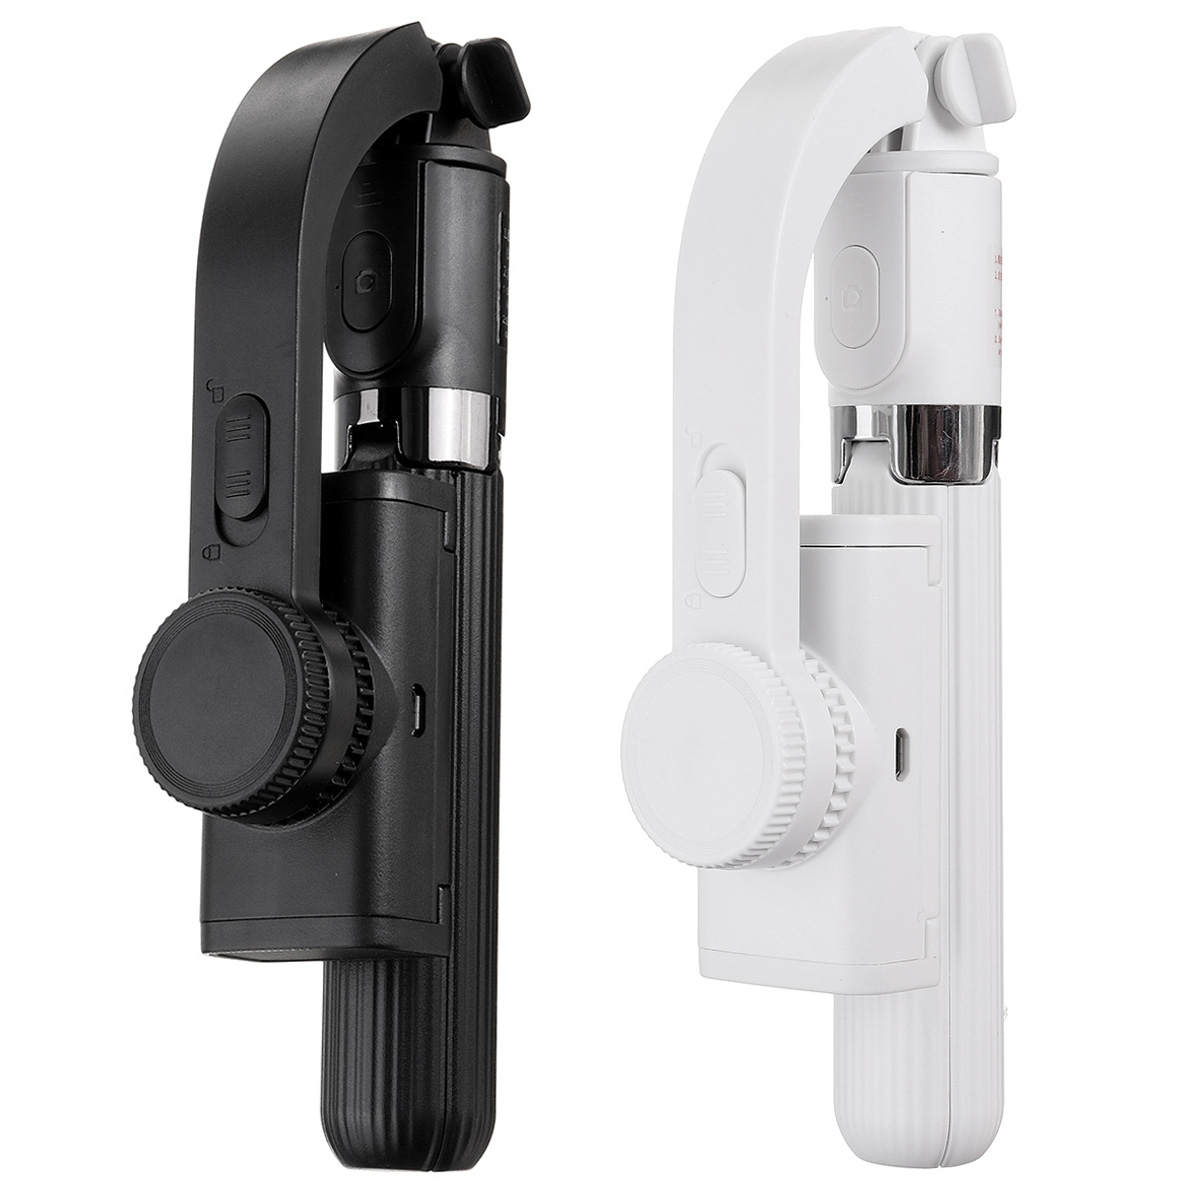 L08-Handheld-Extendable-bluetooth-Aluminium-Alloy-Tripod-Selfie-Stick-for-Mobile-Phone-Shooting-Stab-1916702-1